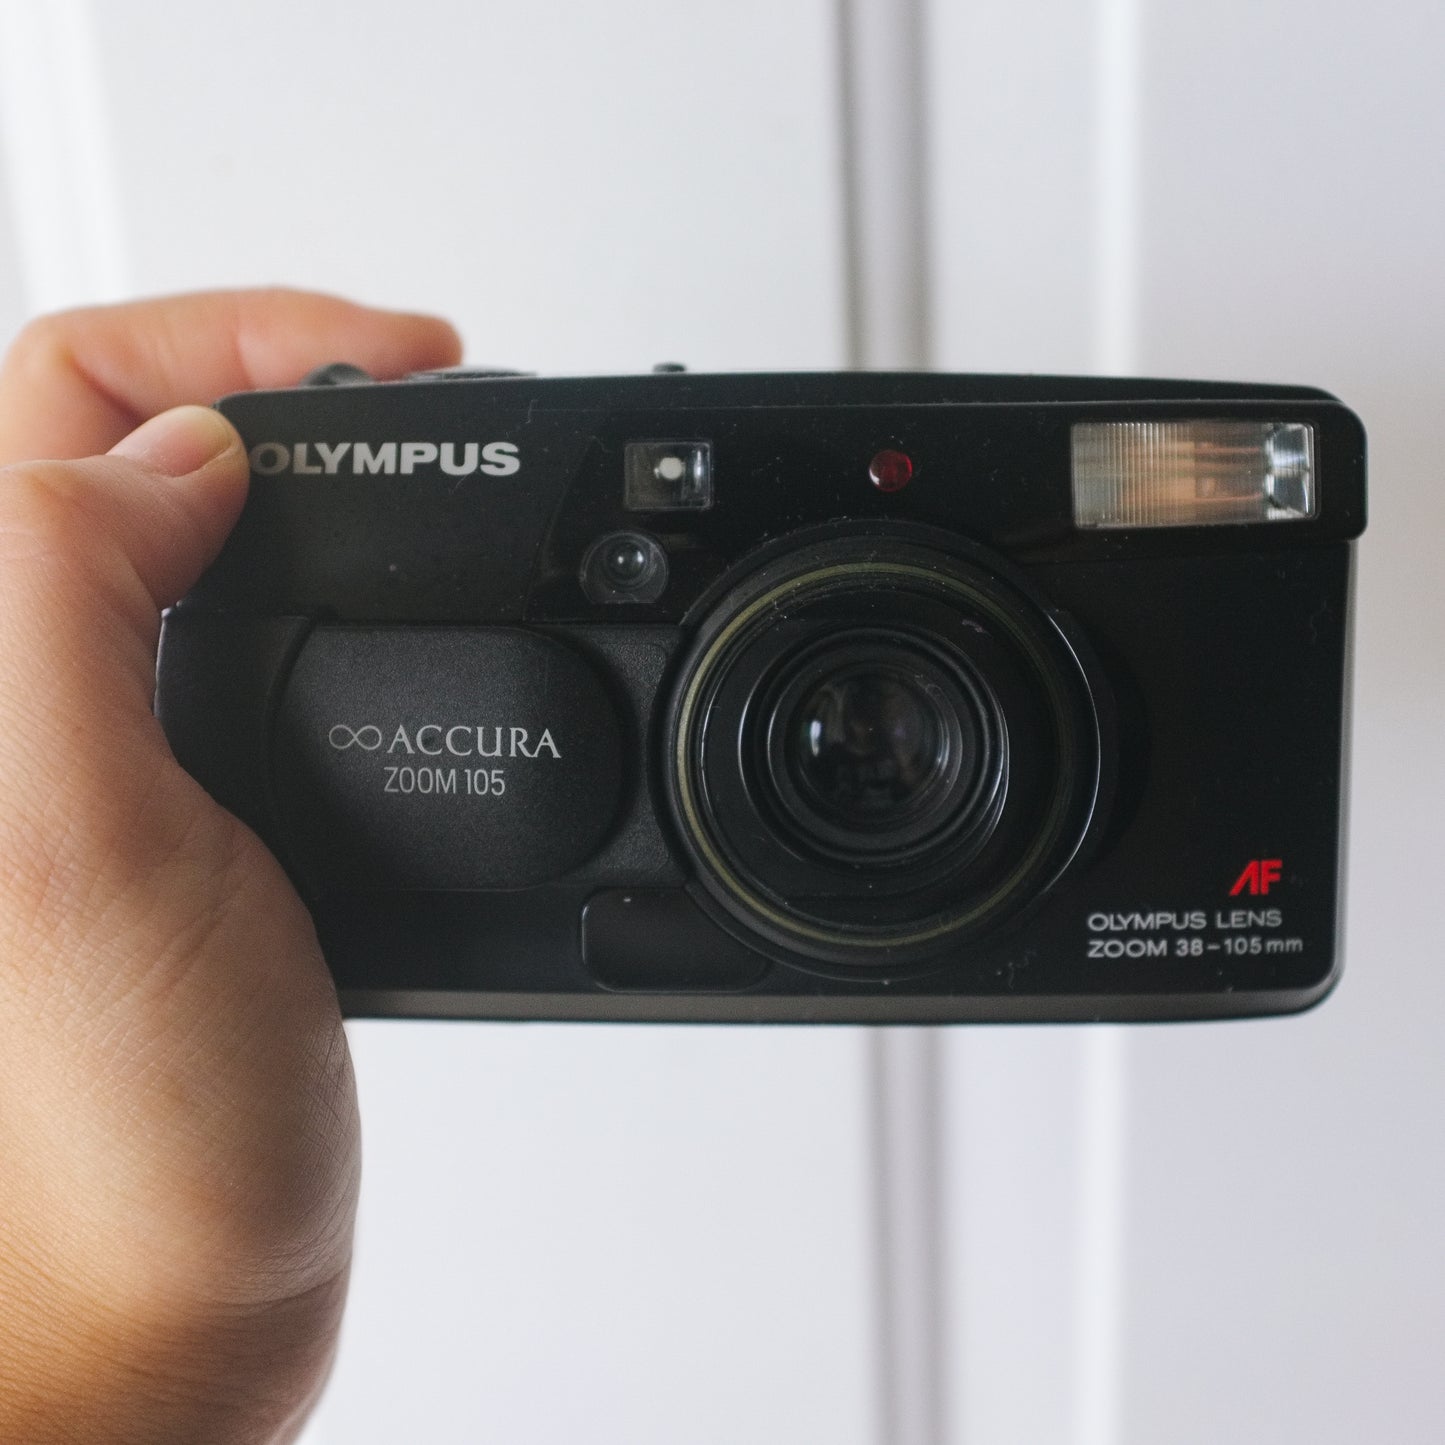 Olympus Infinity Accura Zoom 105 35mm camera